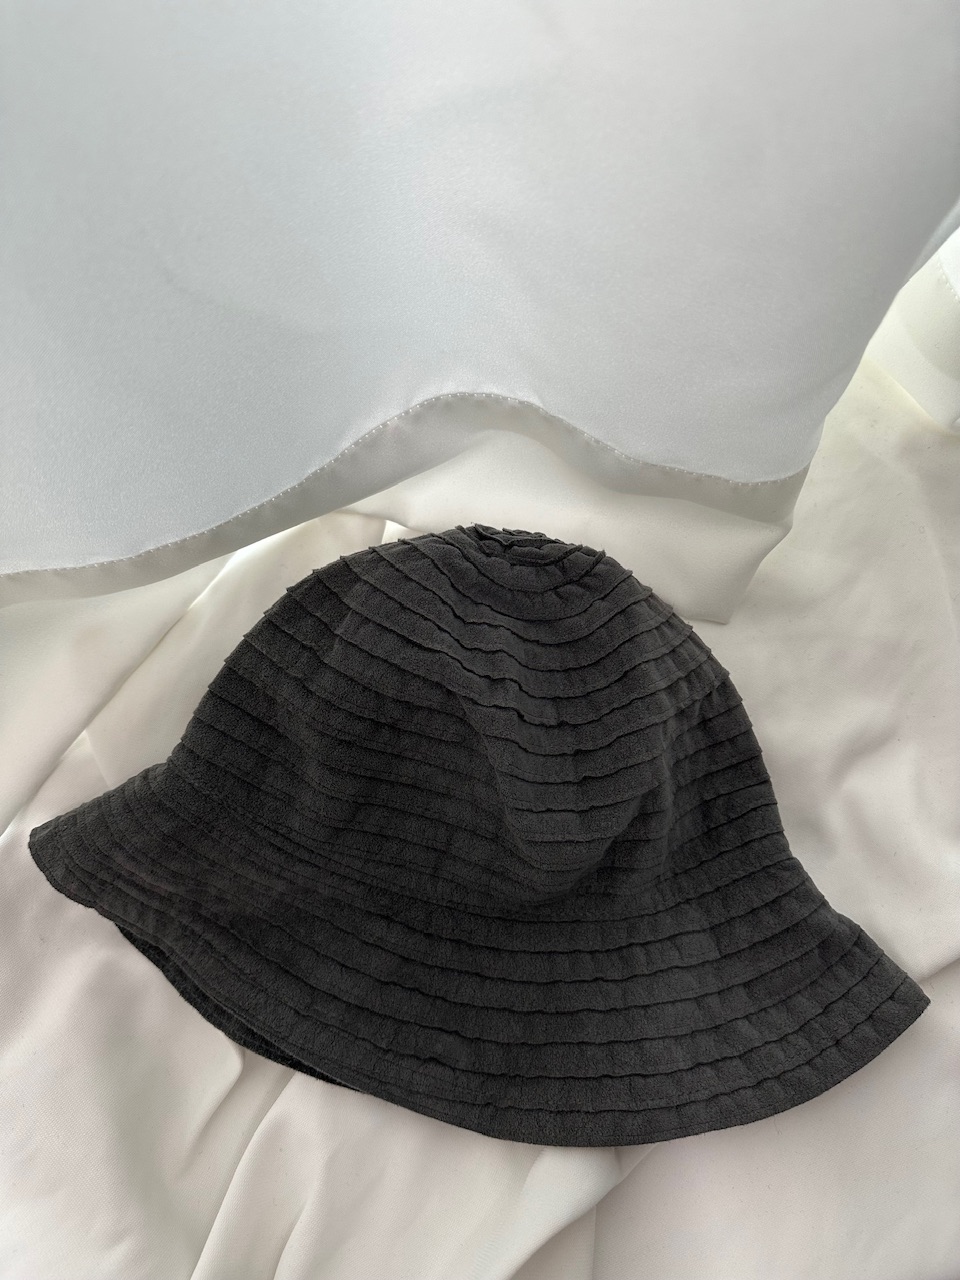 Grey hat